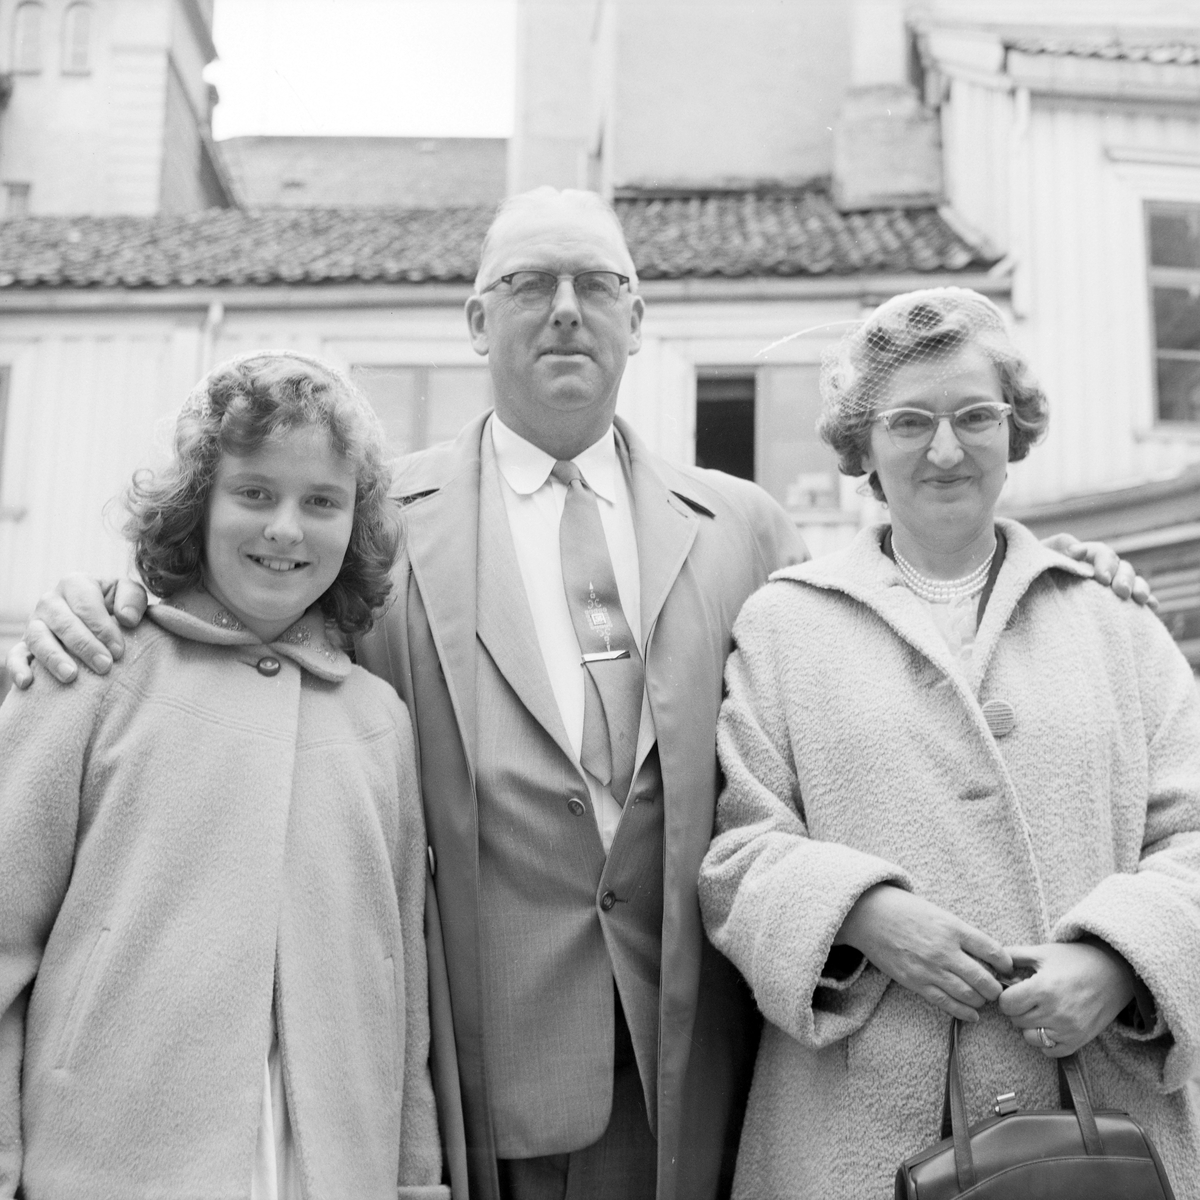 Norskamerikaner Bjarne Høiseth med familie på besøk i byen